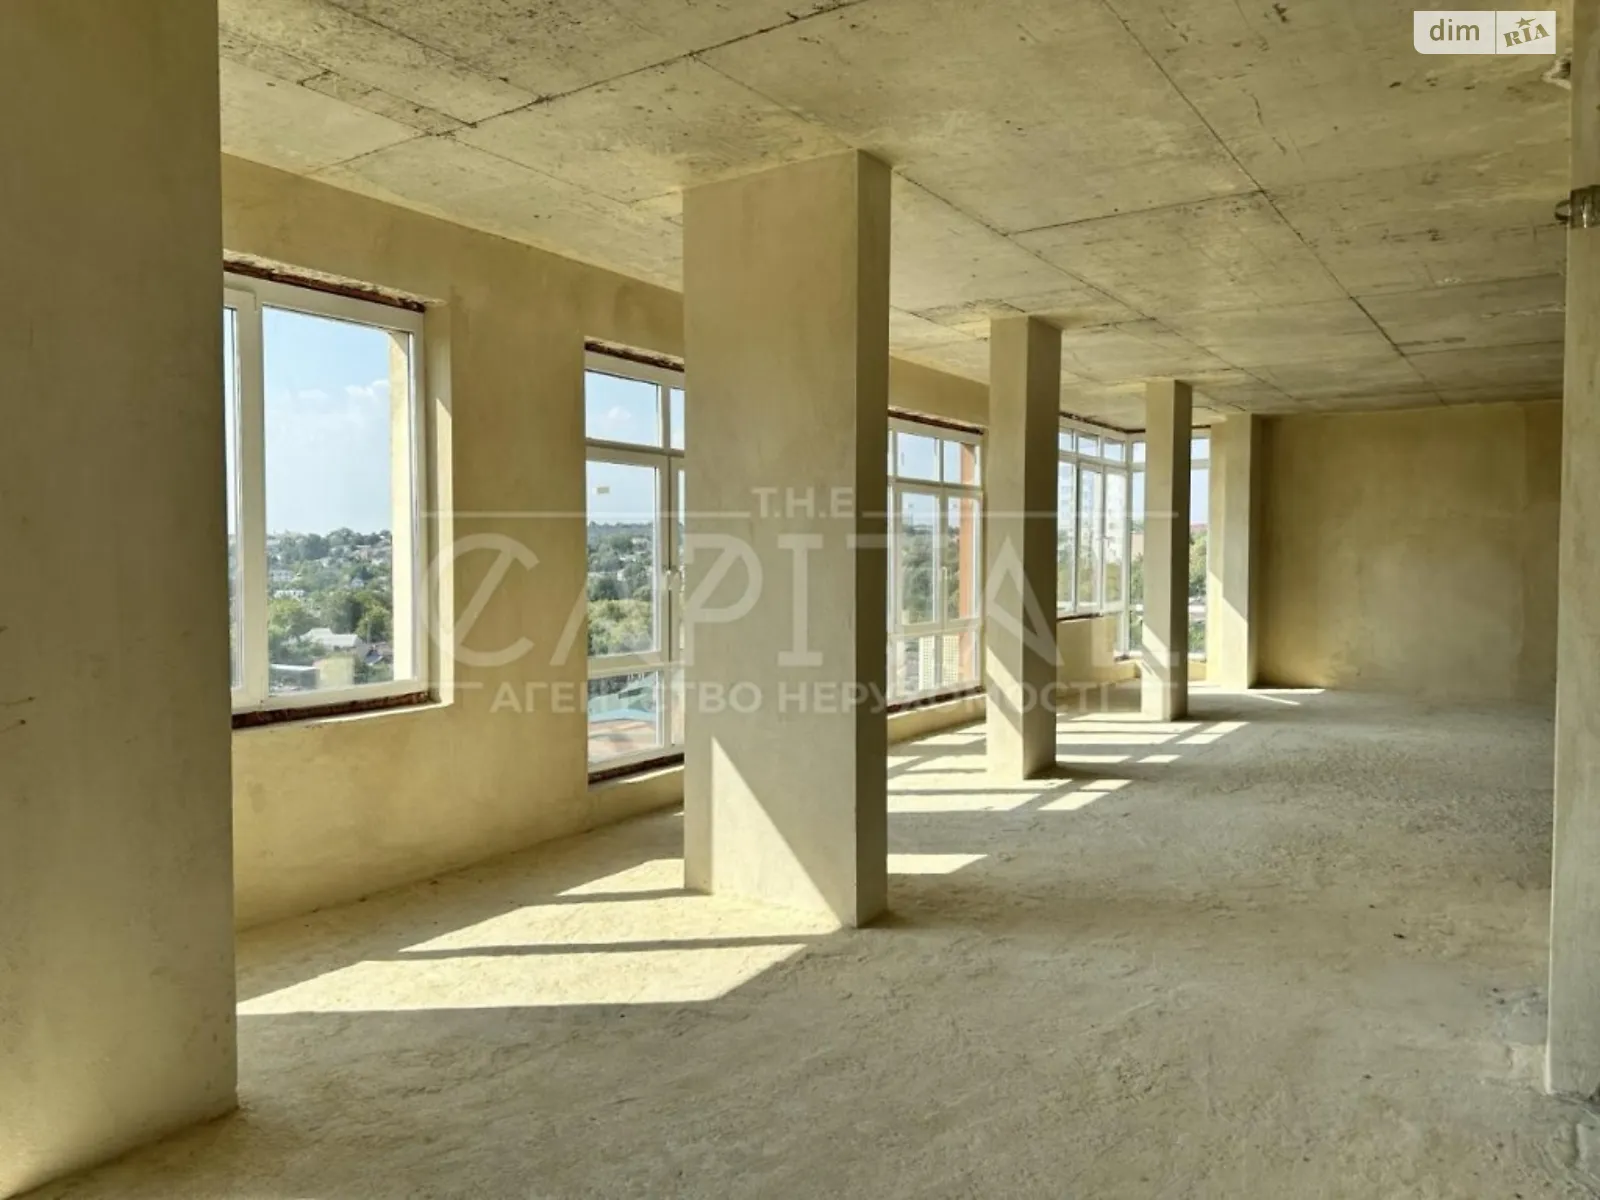 Продается 2-комнатная квартира 74.71 кв. м в Умани - фото 3